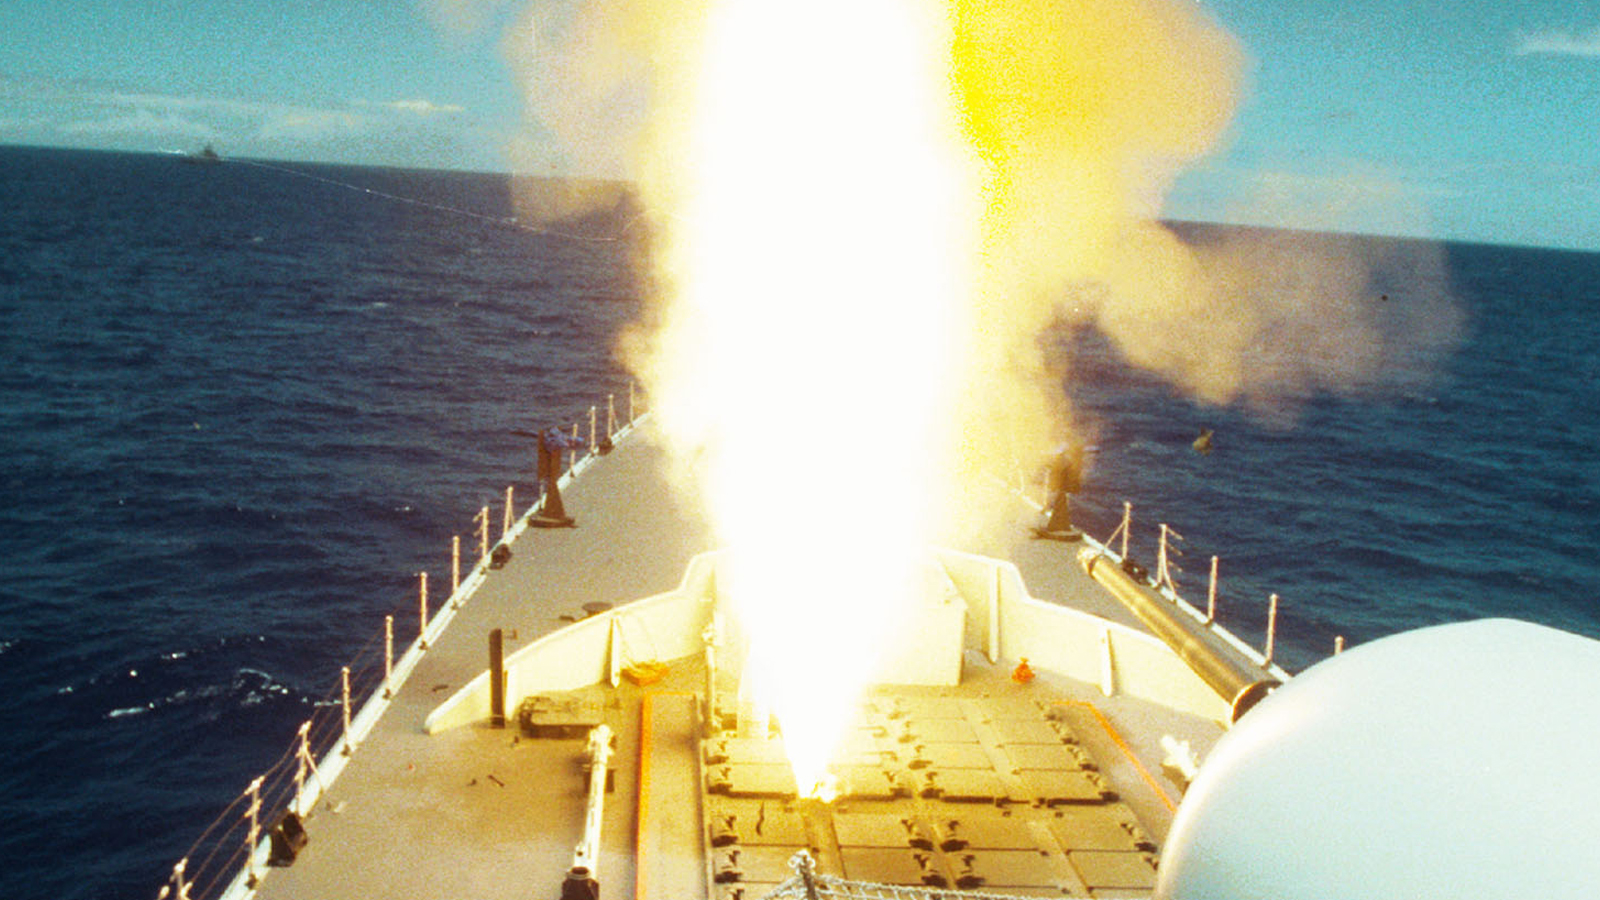 Slide - HMCS Algonquin fired the first SM-2 missile